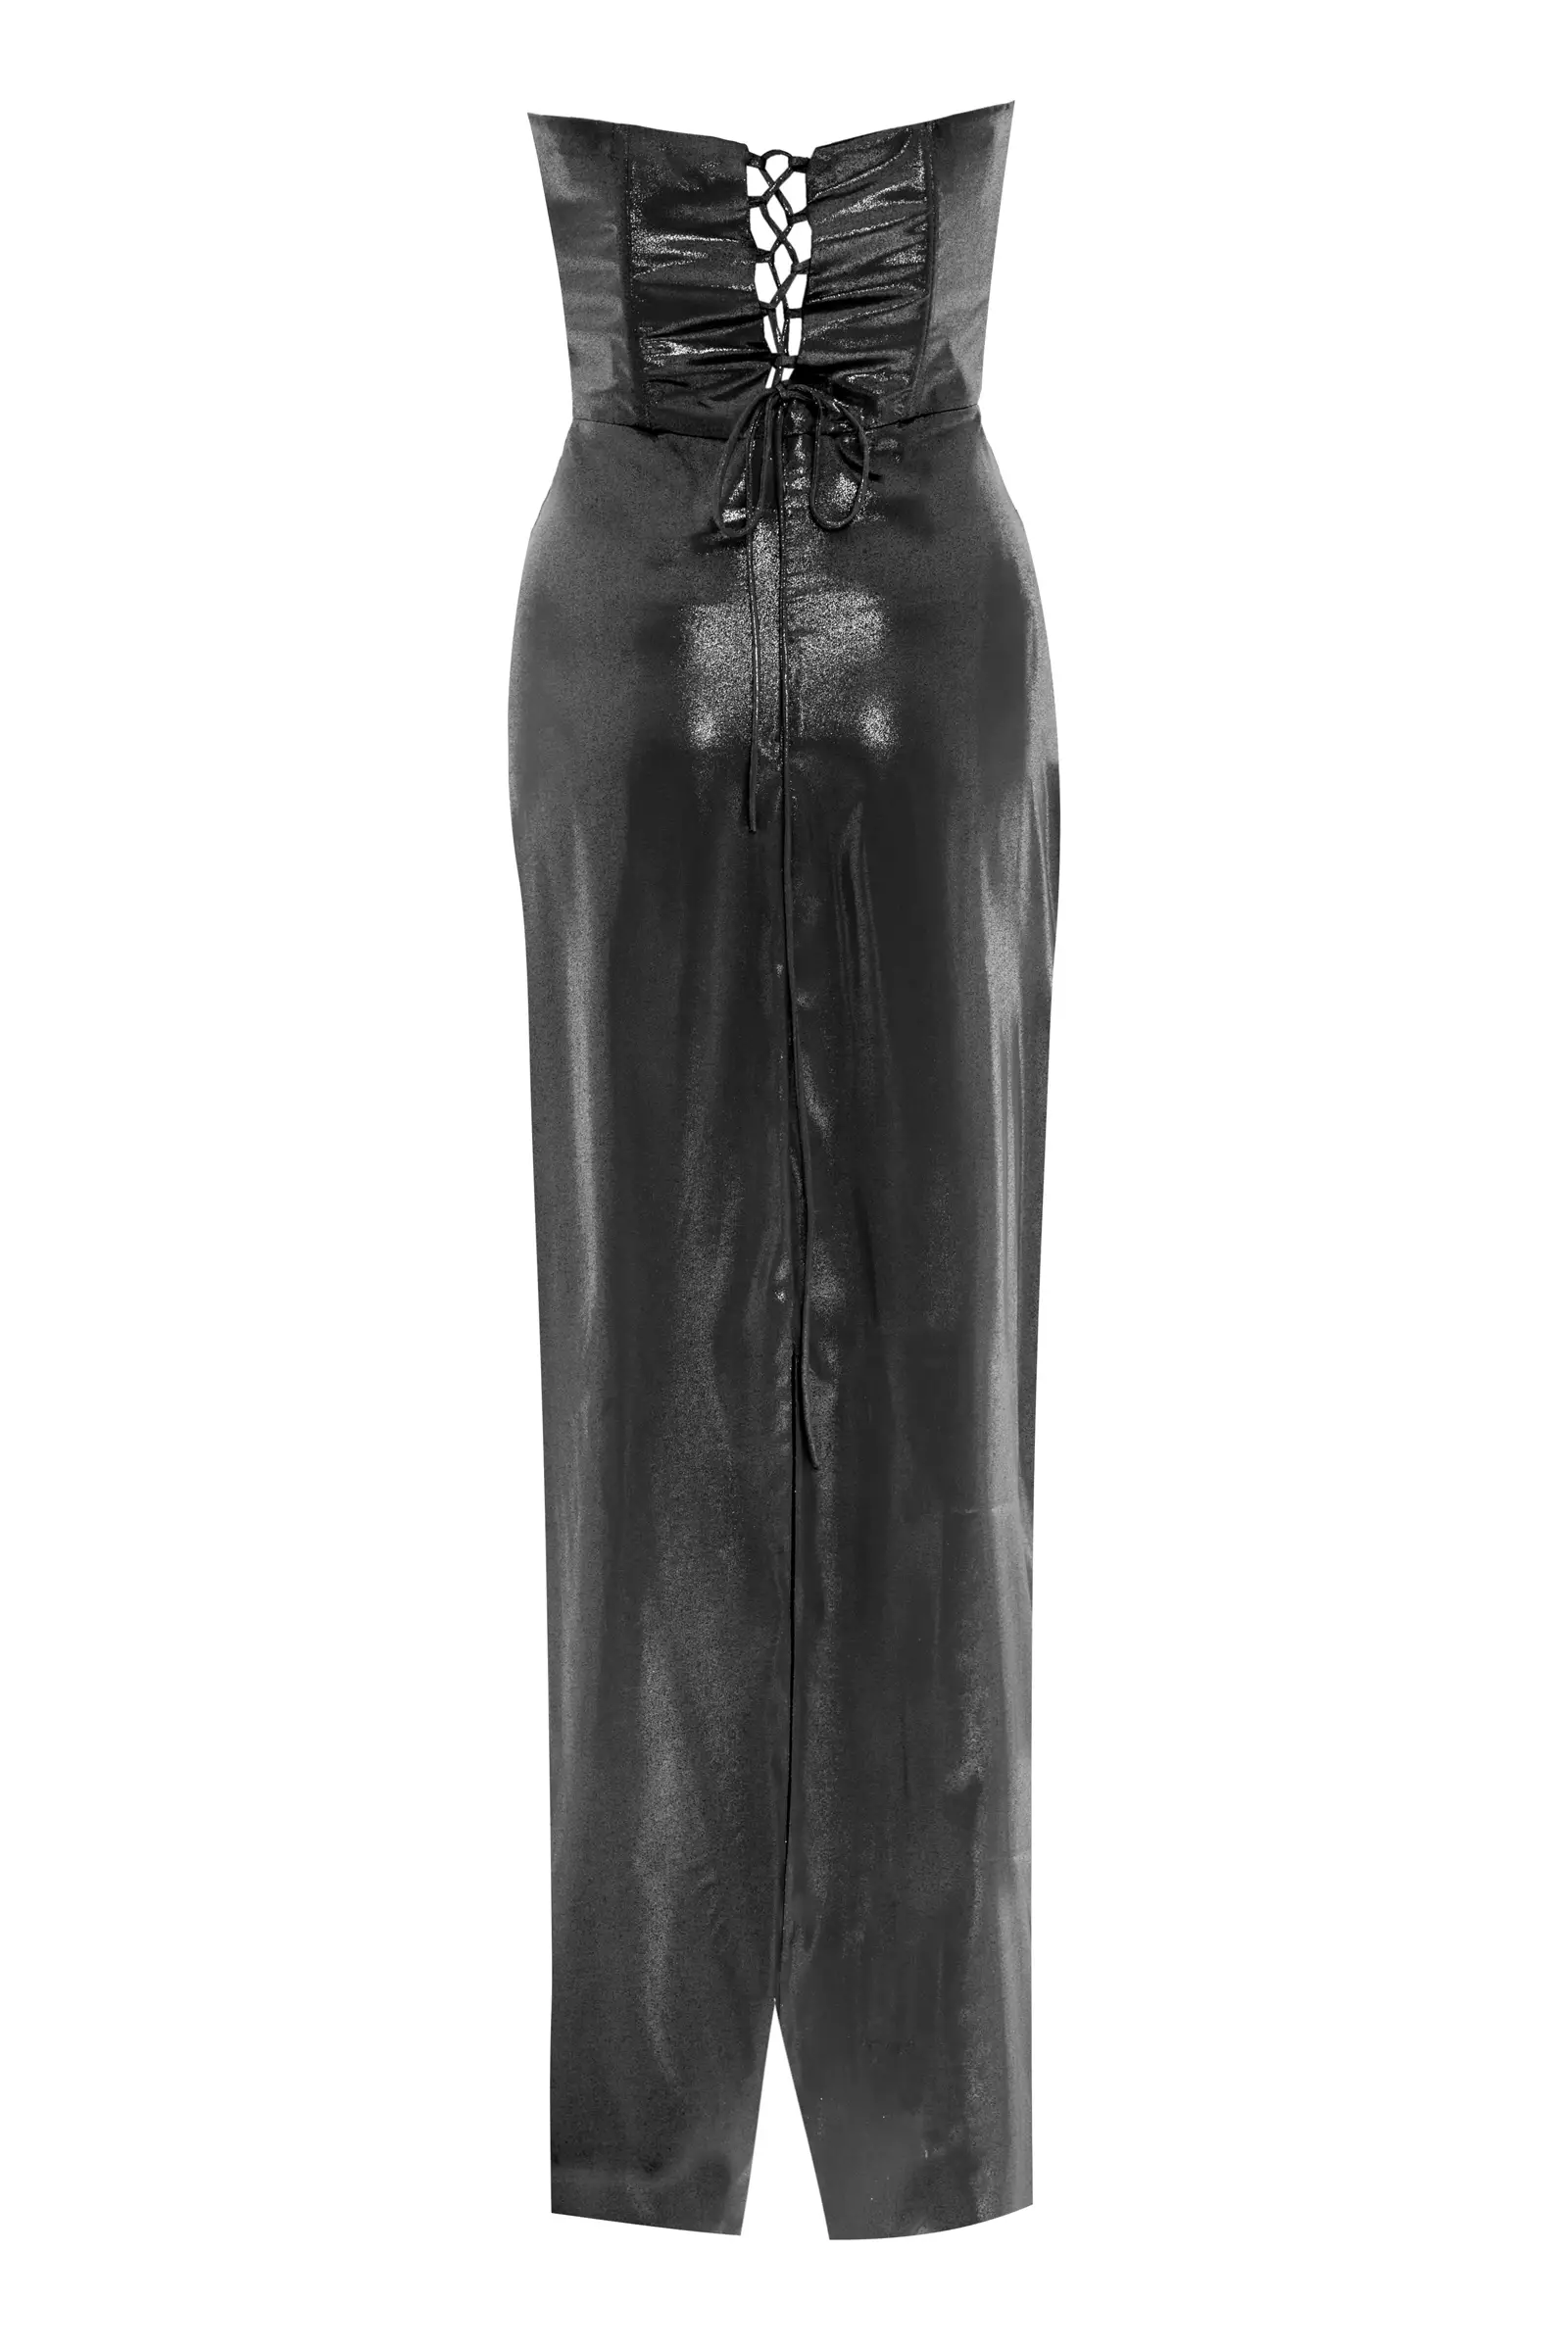 Black leather strapless maxi dress